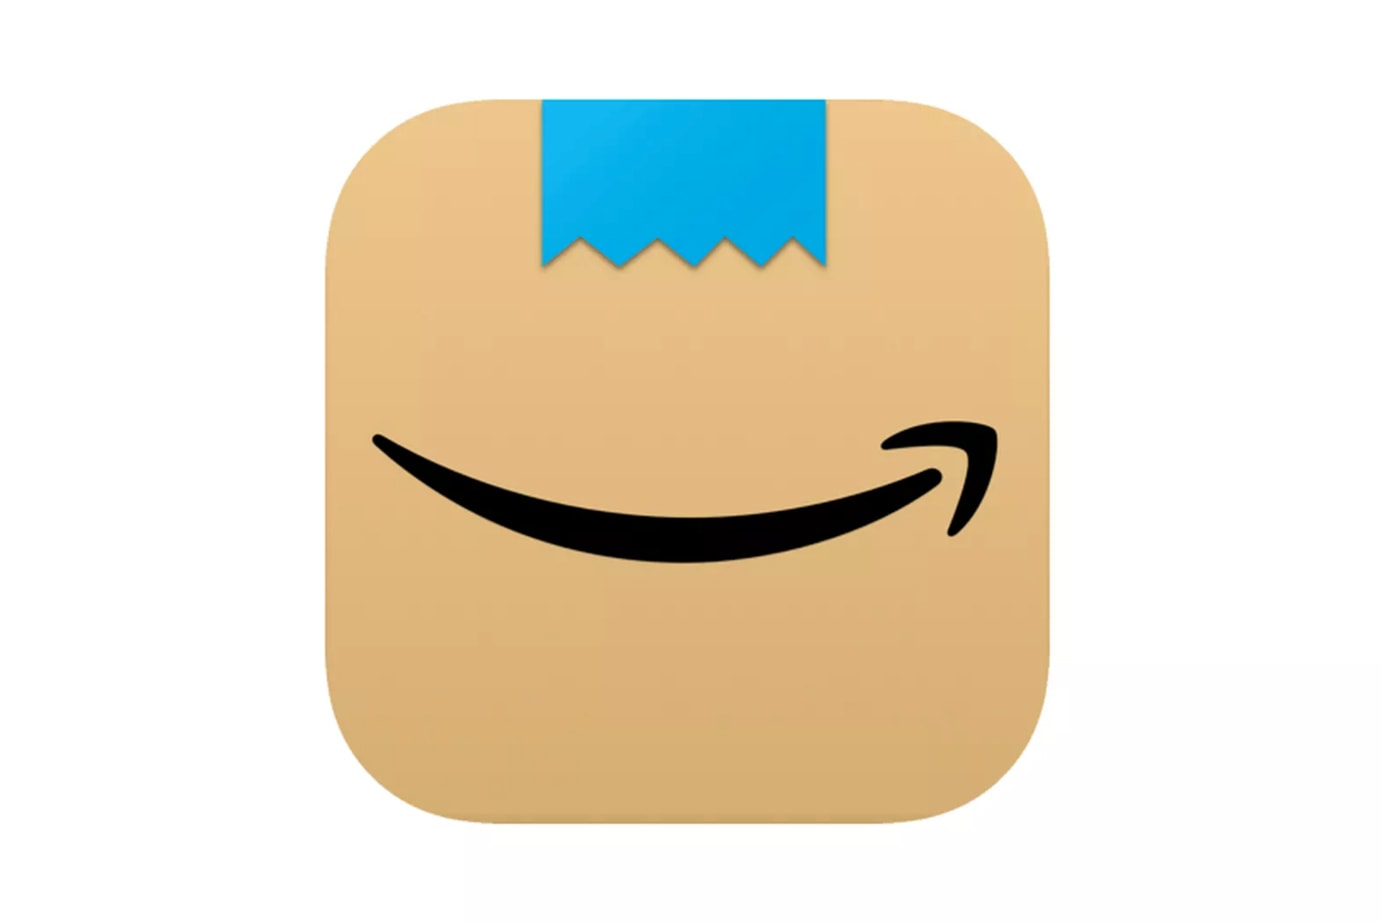 Amazon controversial adolf hitler mustache app icon update tech nazi design apps icons widgets shopping online Jeff bezos twitter 